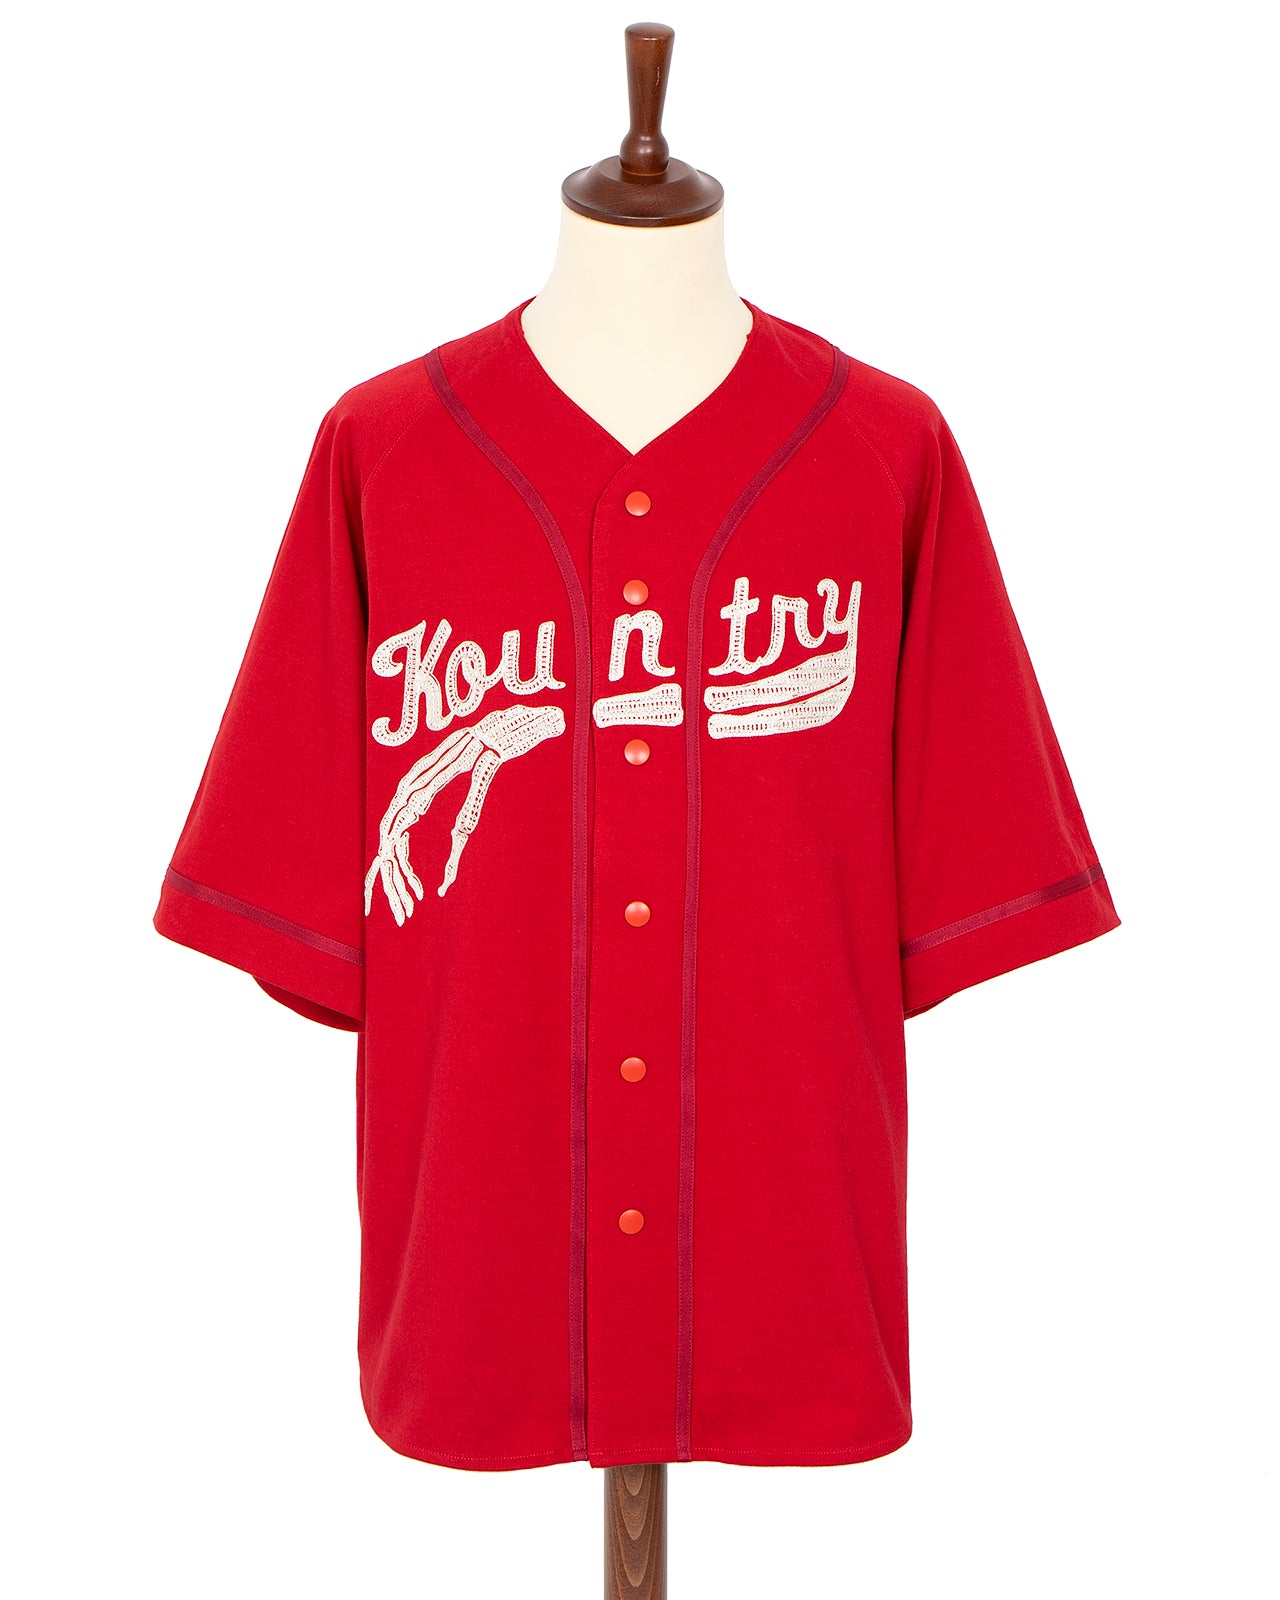 Kapital Densed Jersey Baseball Shirt, Bone, Red